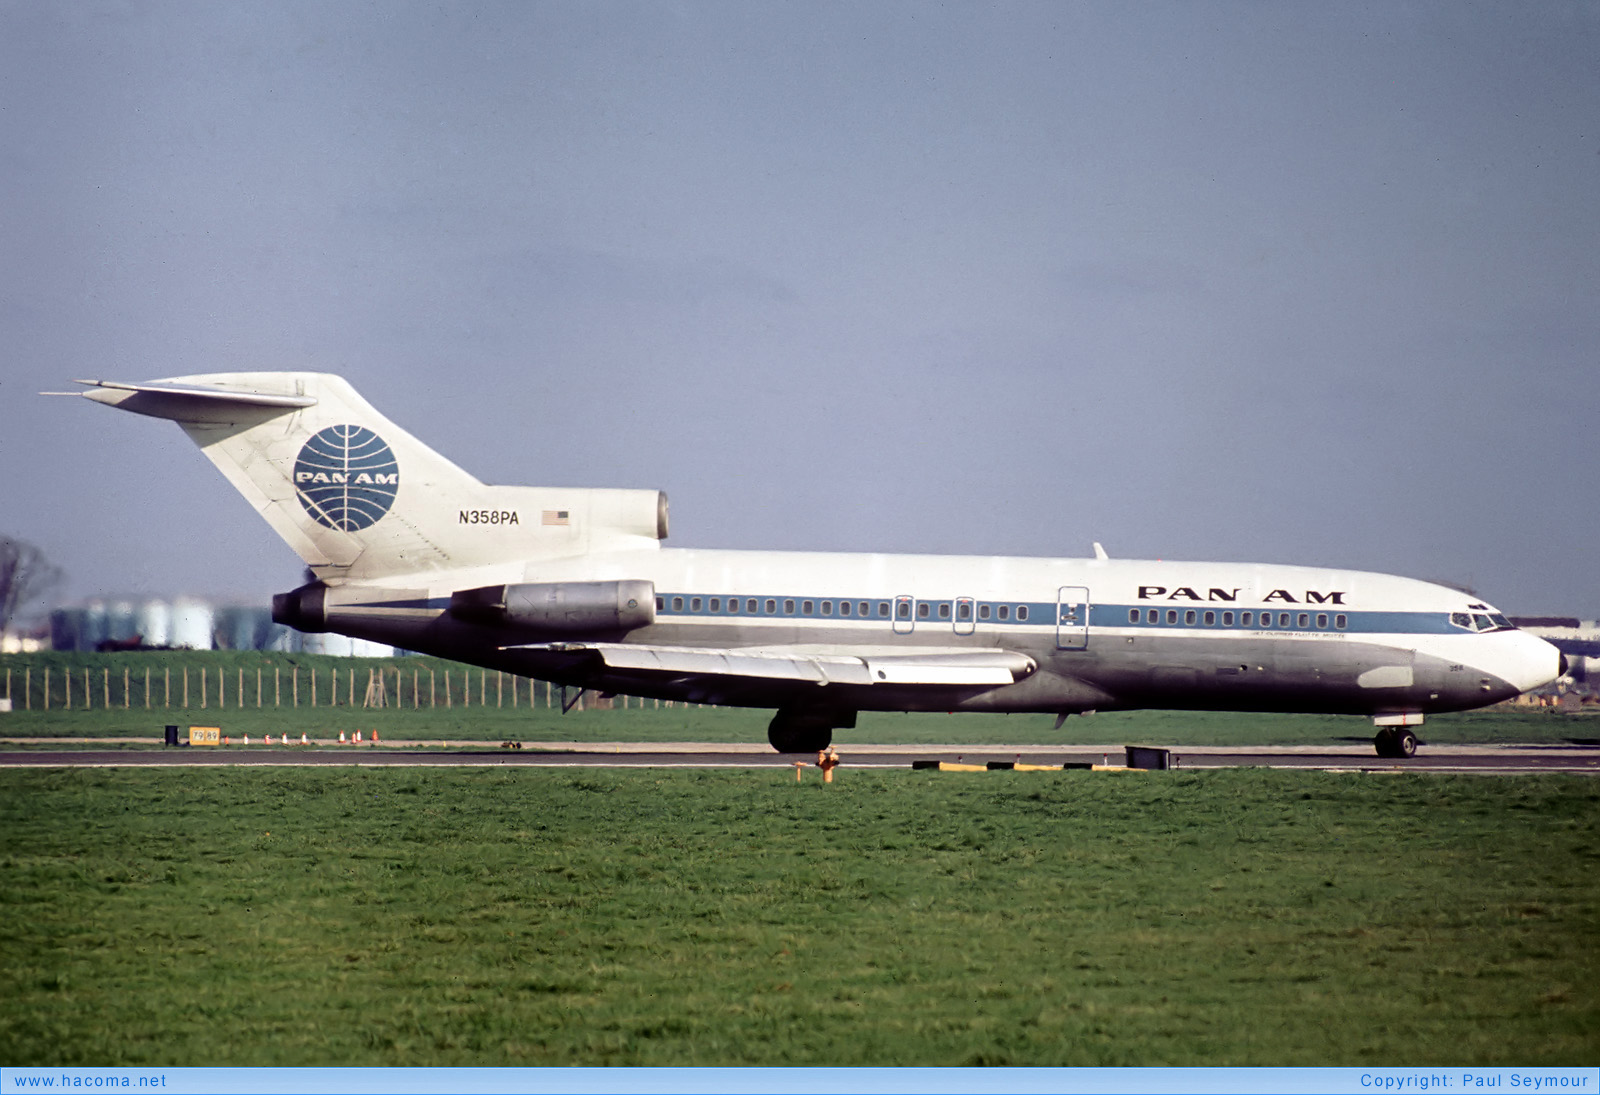 Foto von N358PA - Pan Am Clipper David Crockett / Berlin / Wucht­brumme / Flotte Motte - London Heathrow Airport - 26.02.1977